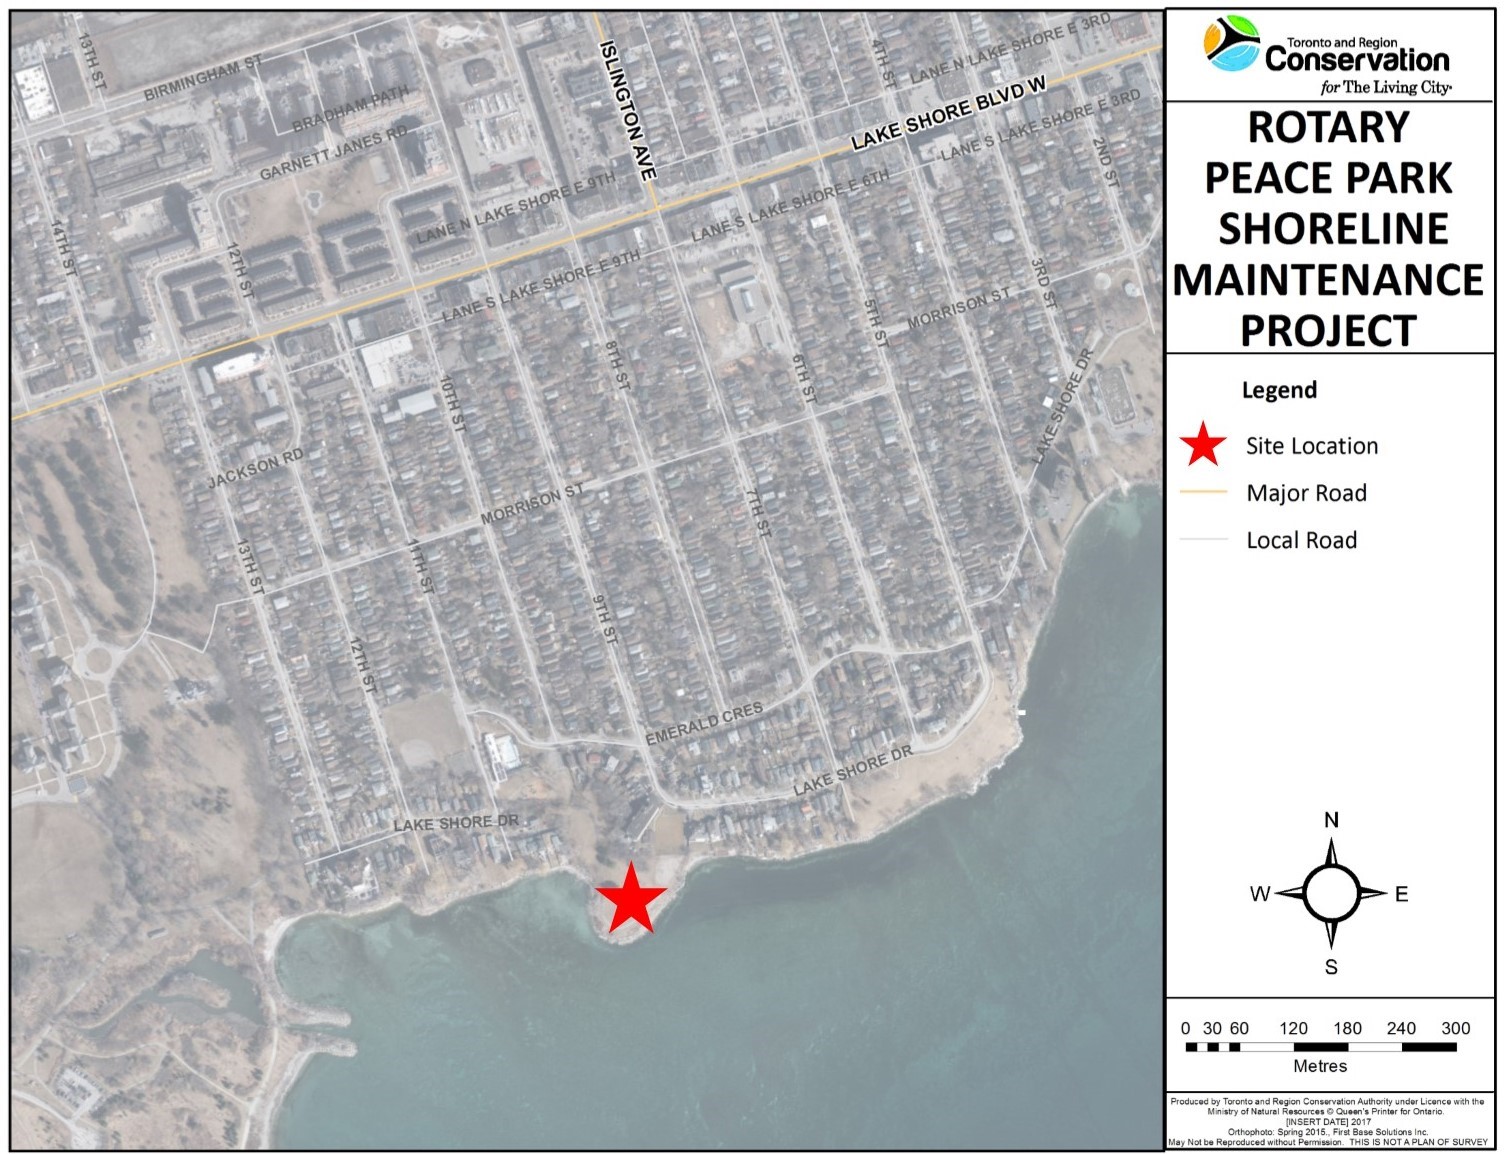 Location of Rotary Peace Park Shoreline Maintenance Project. Source: TRCA, 2018.